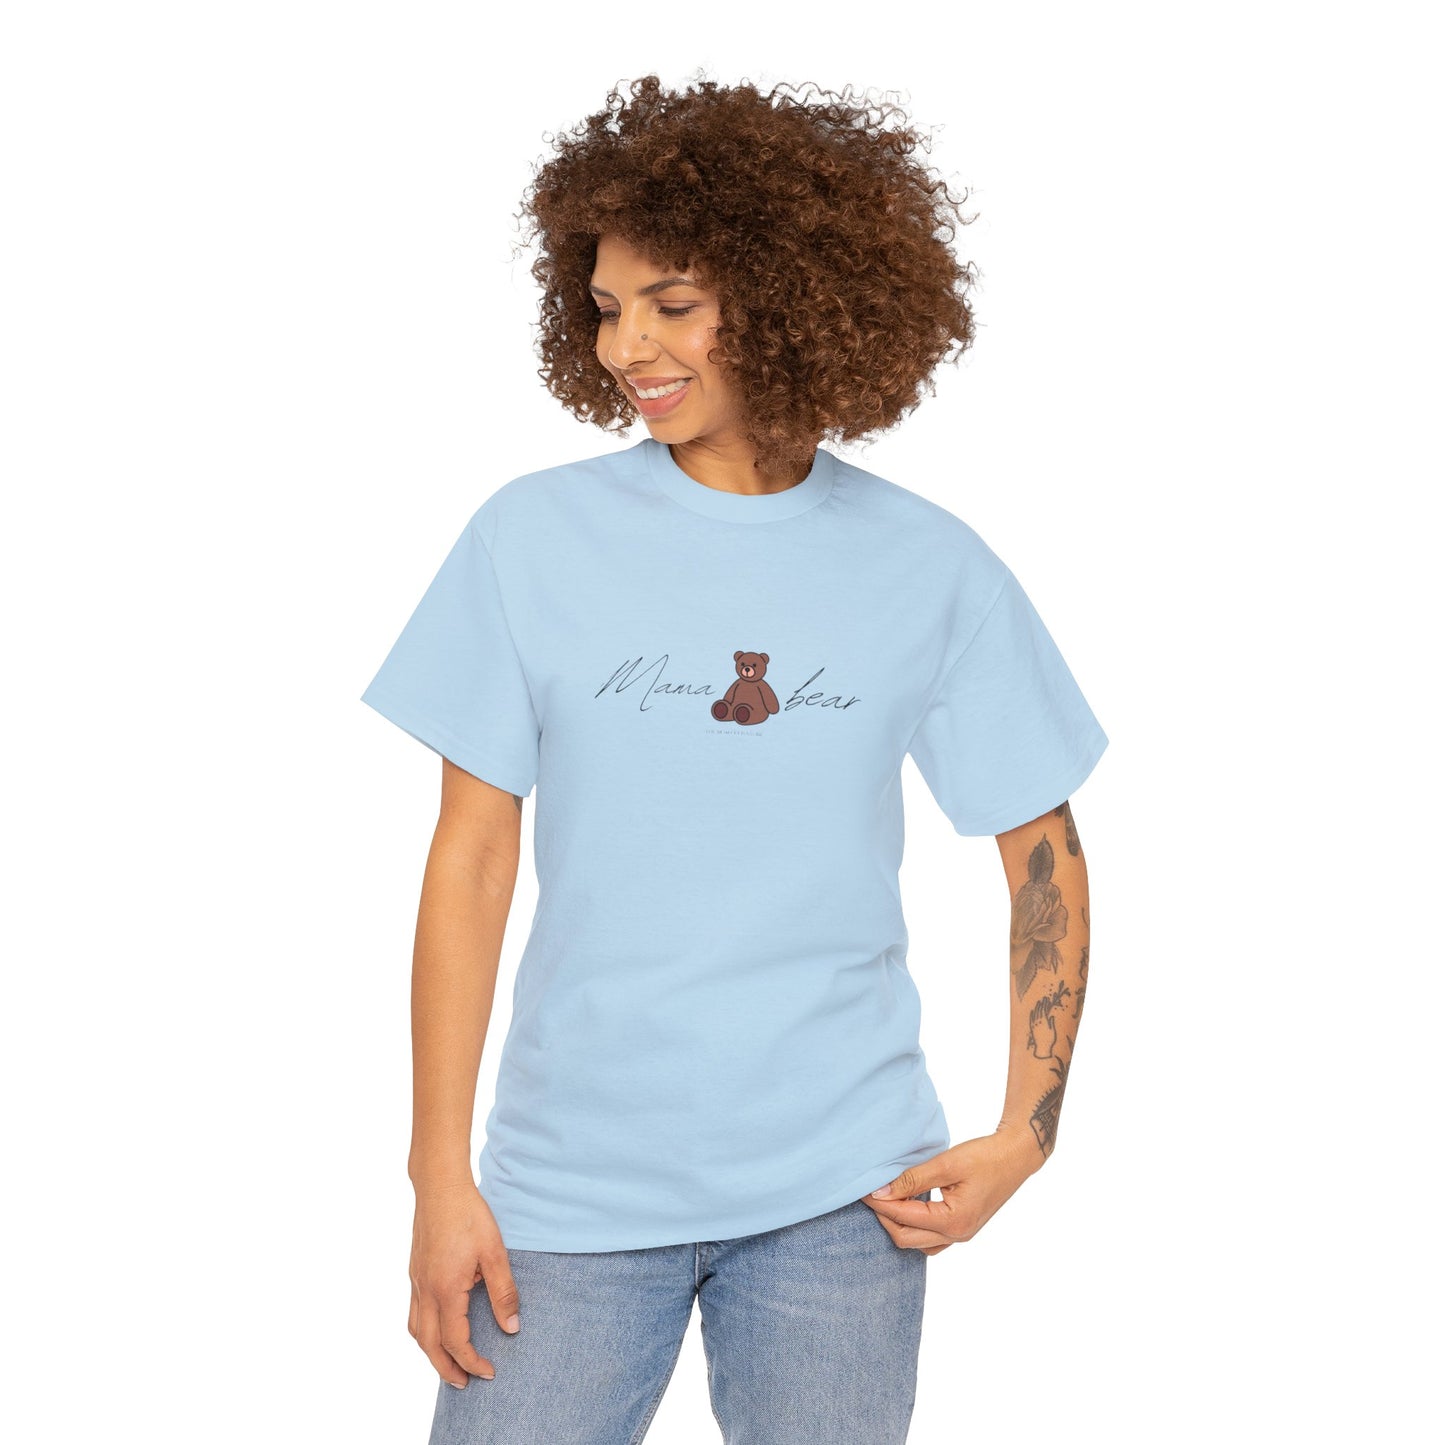 Minimalist MAMA BEAR t-shirt